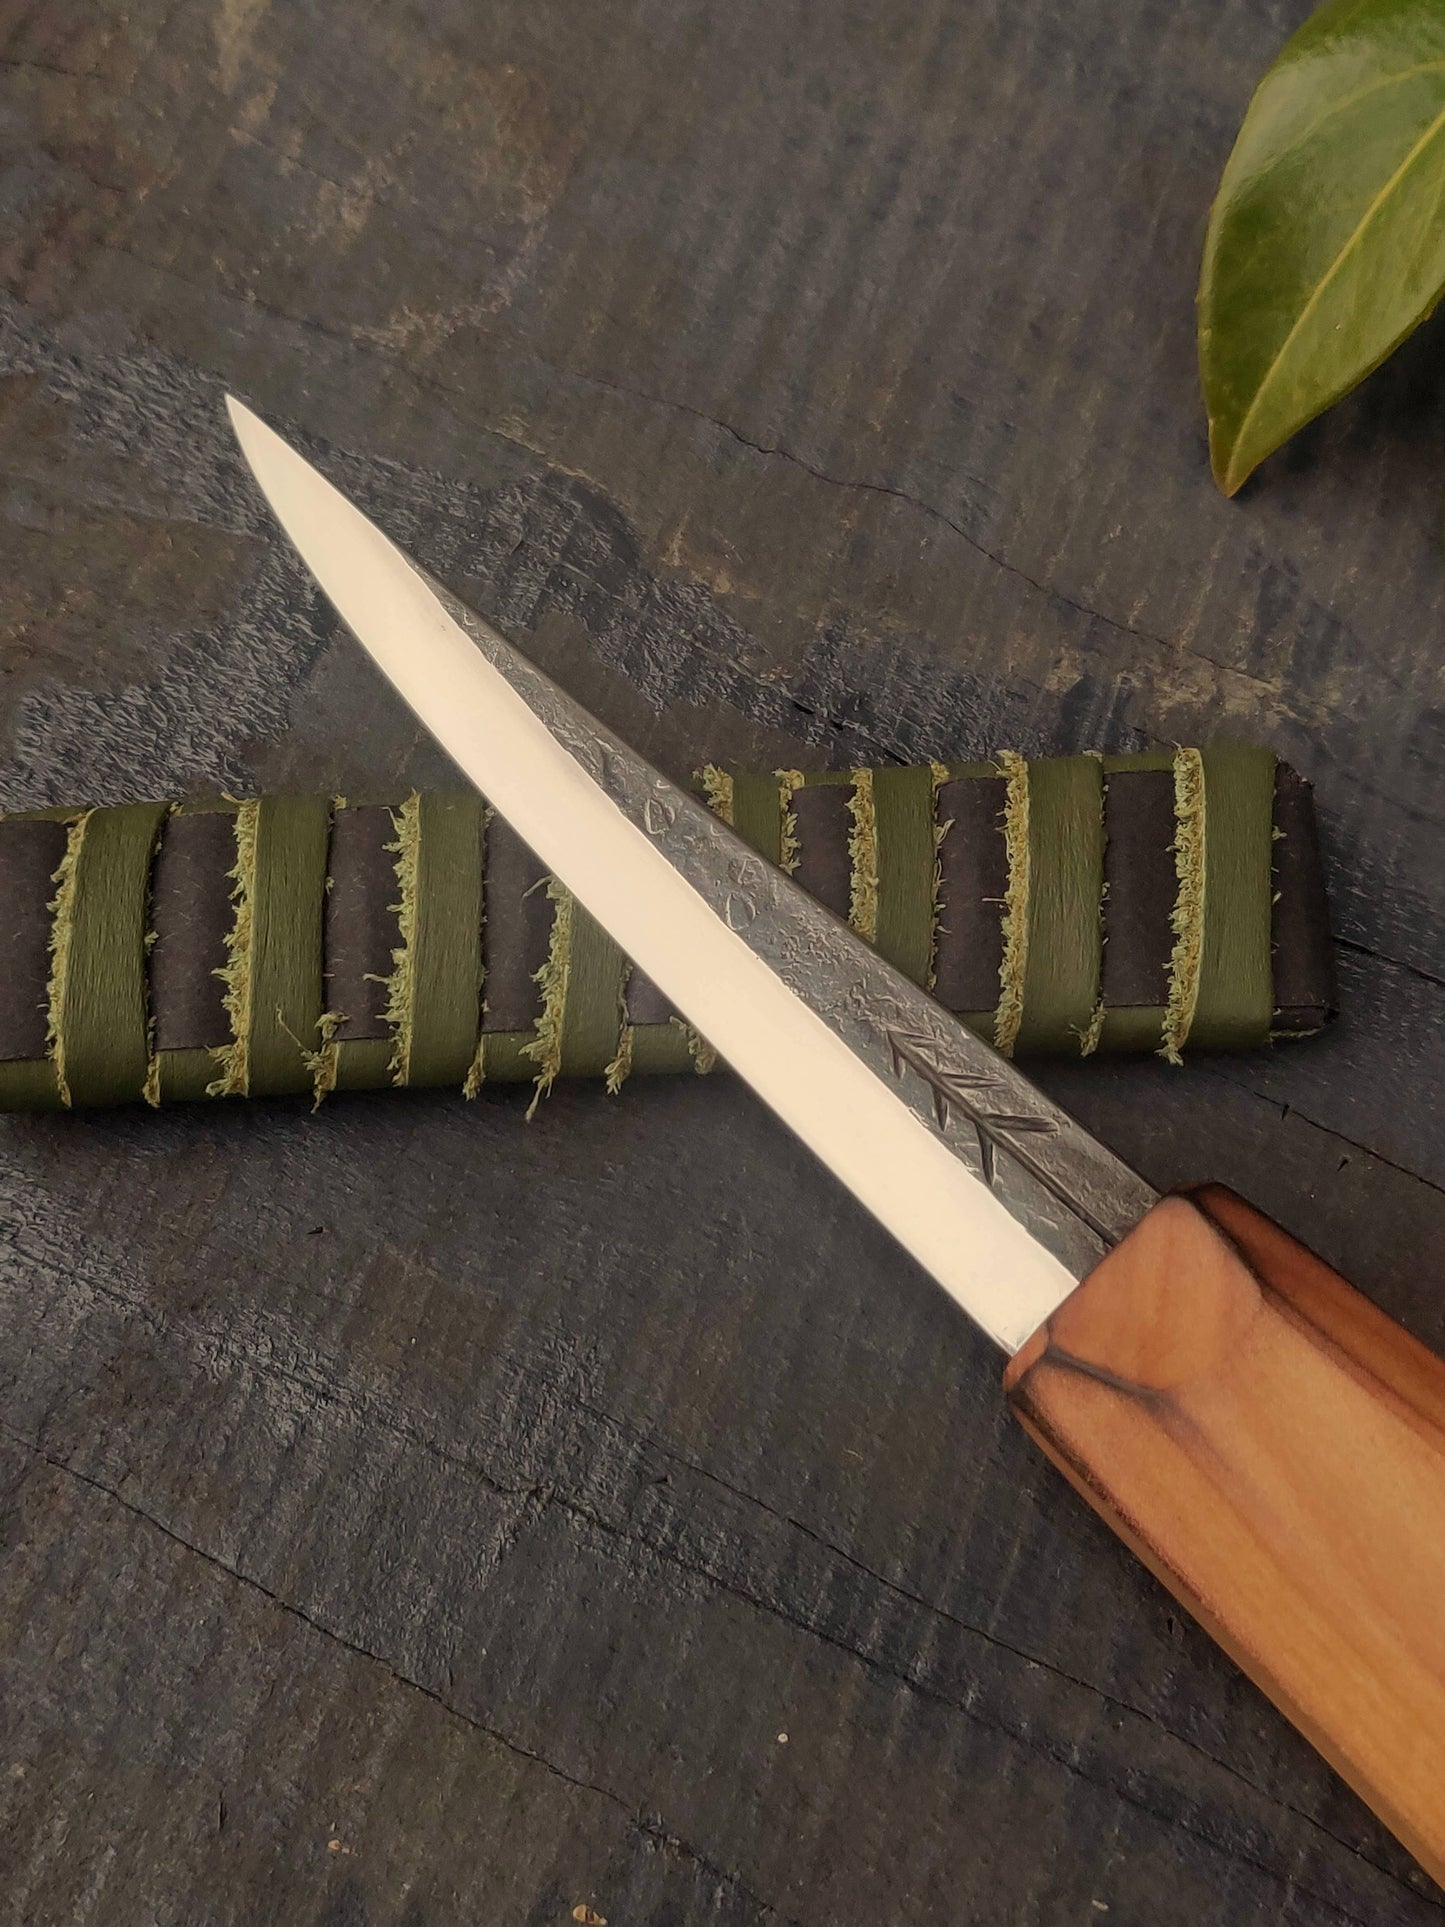 100mm Woodcarving knife, whittling knife